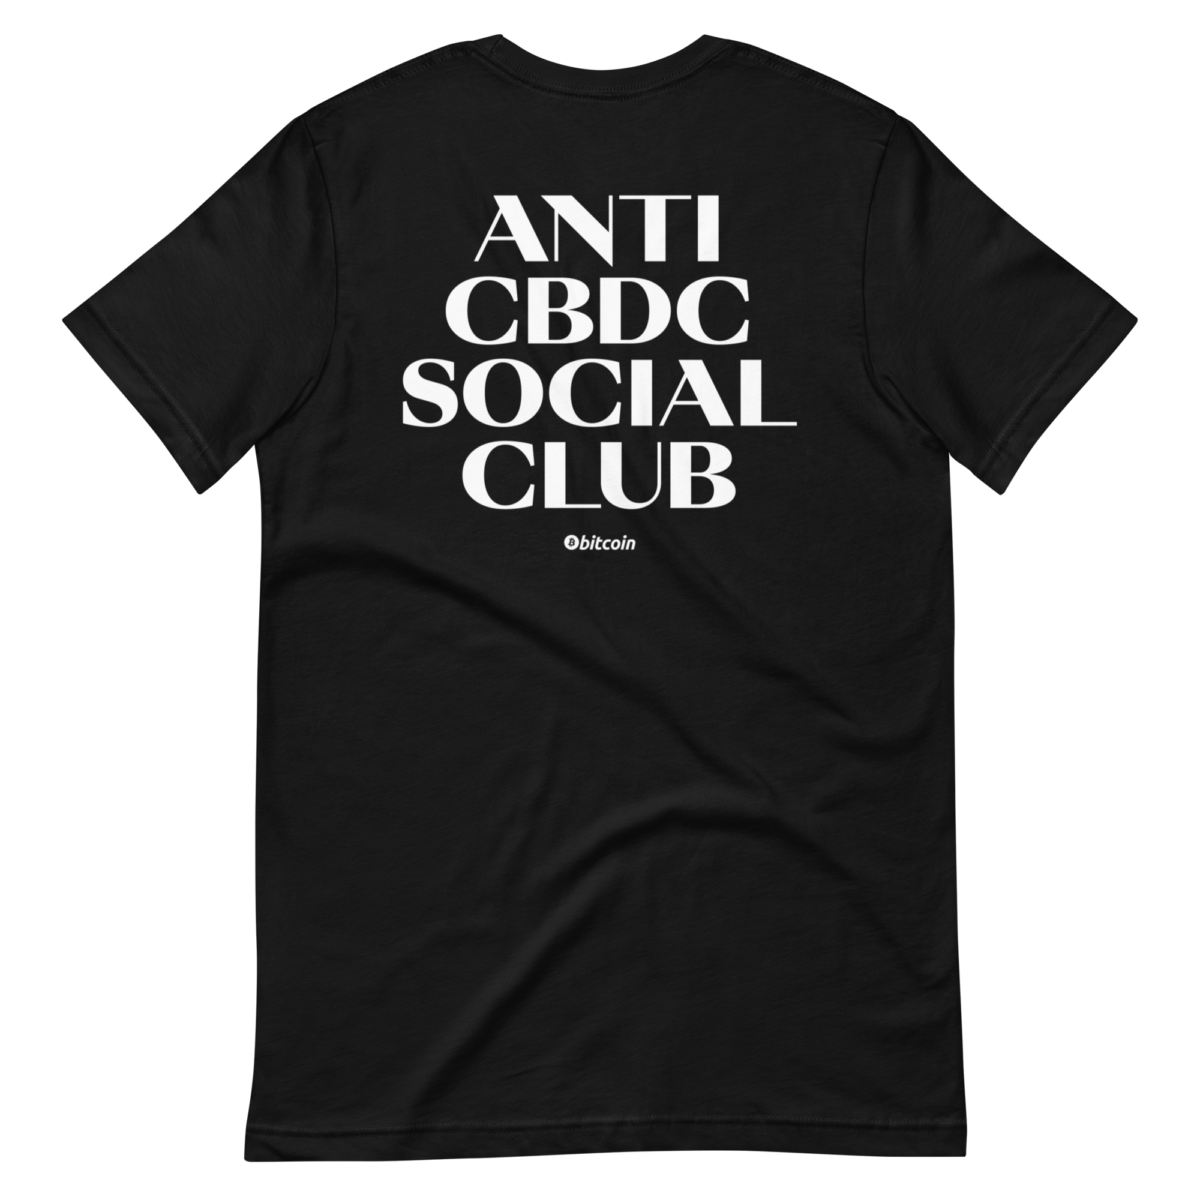 unisex staple t shirt black back 63305f4a1bb68 - Anti CBDC Social Club T-Shirt